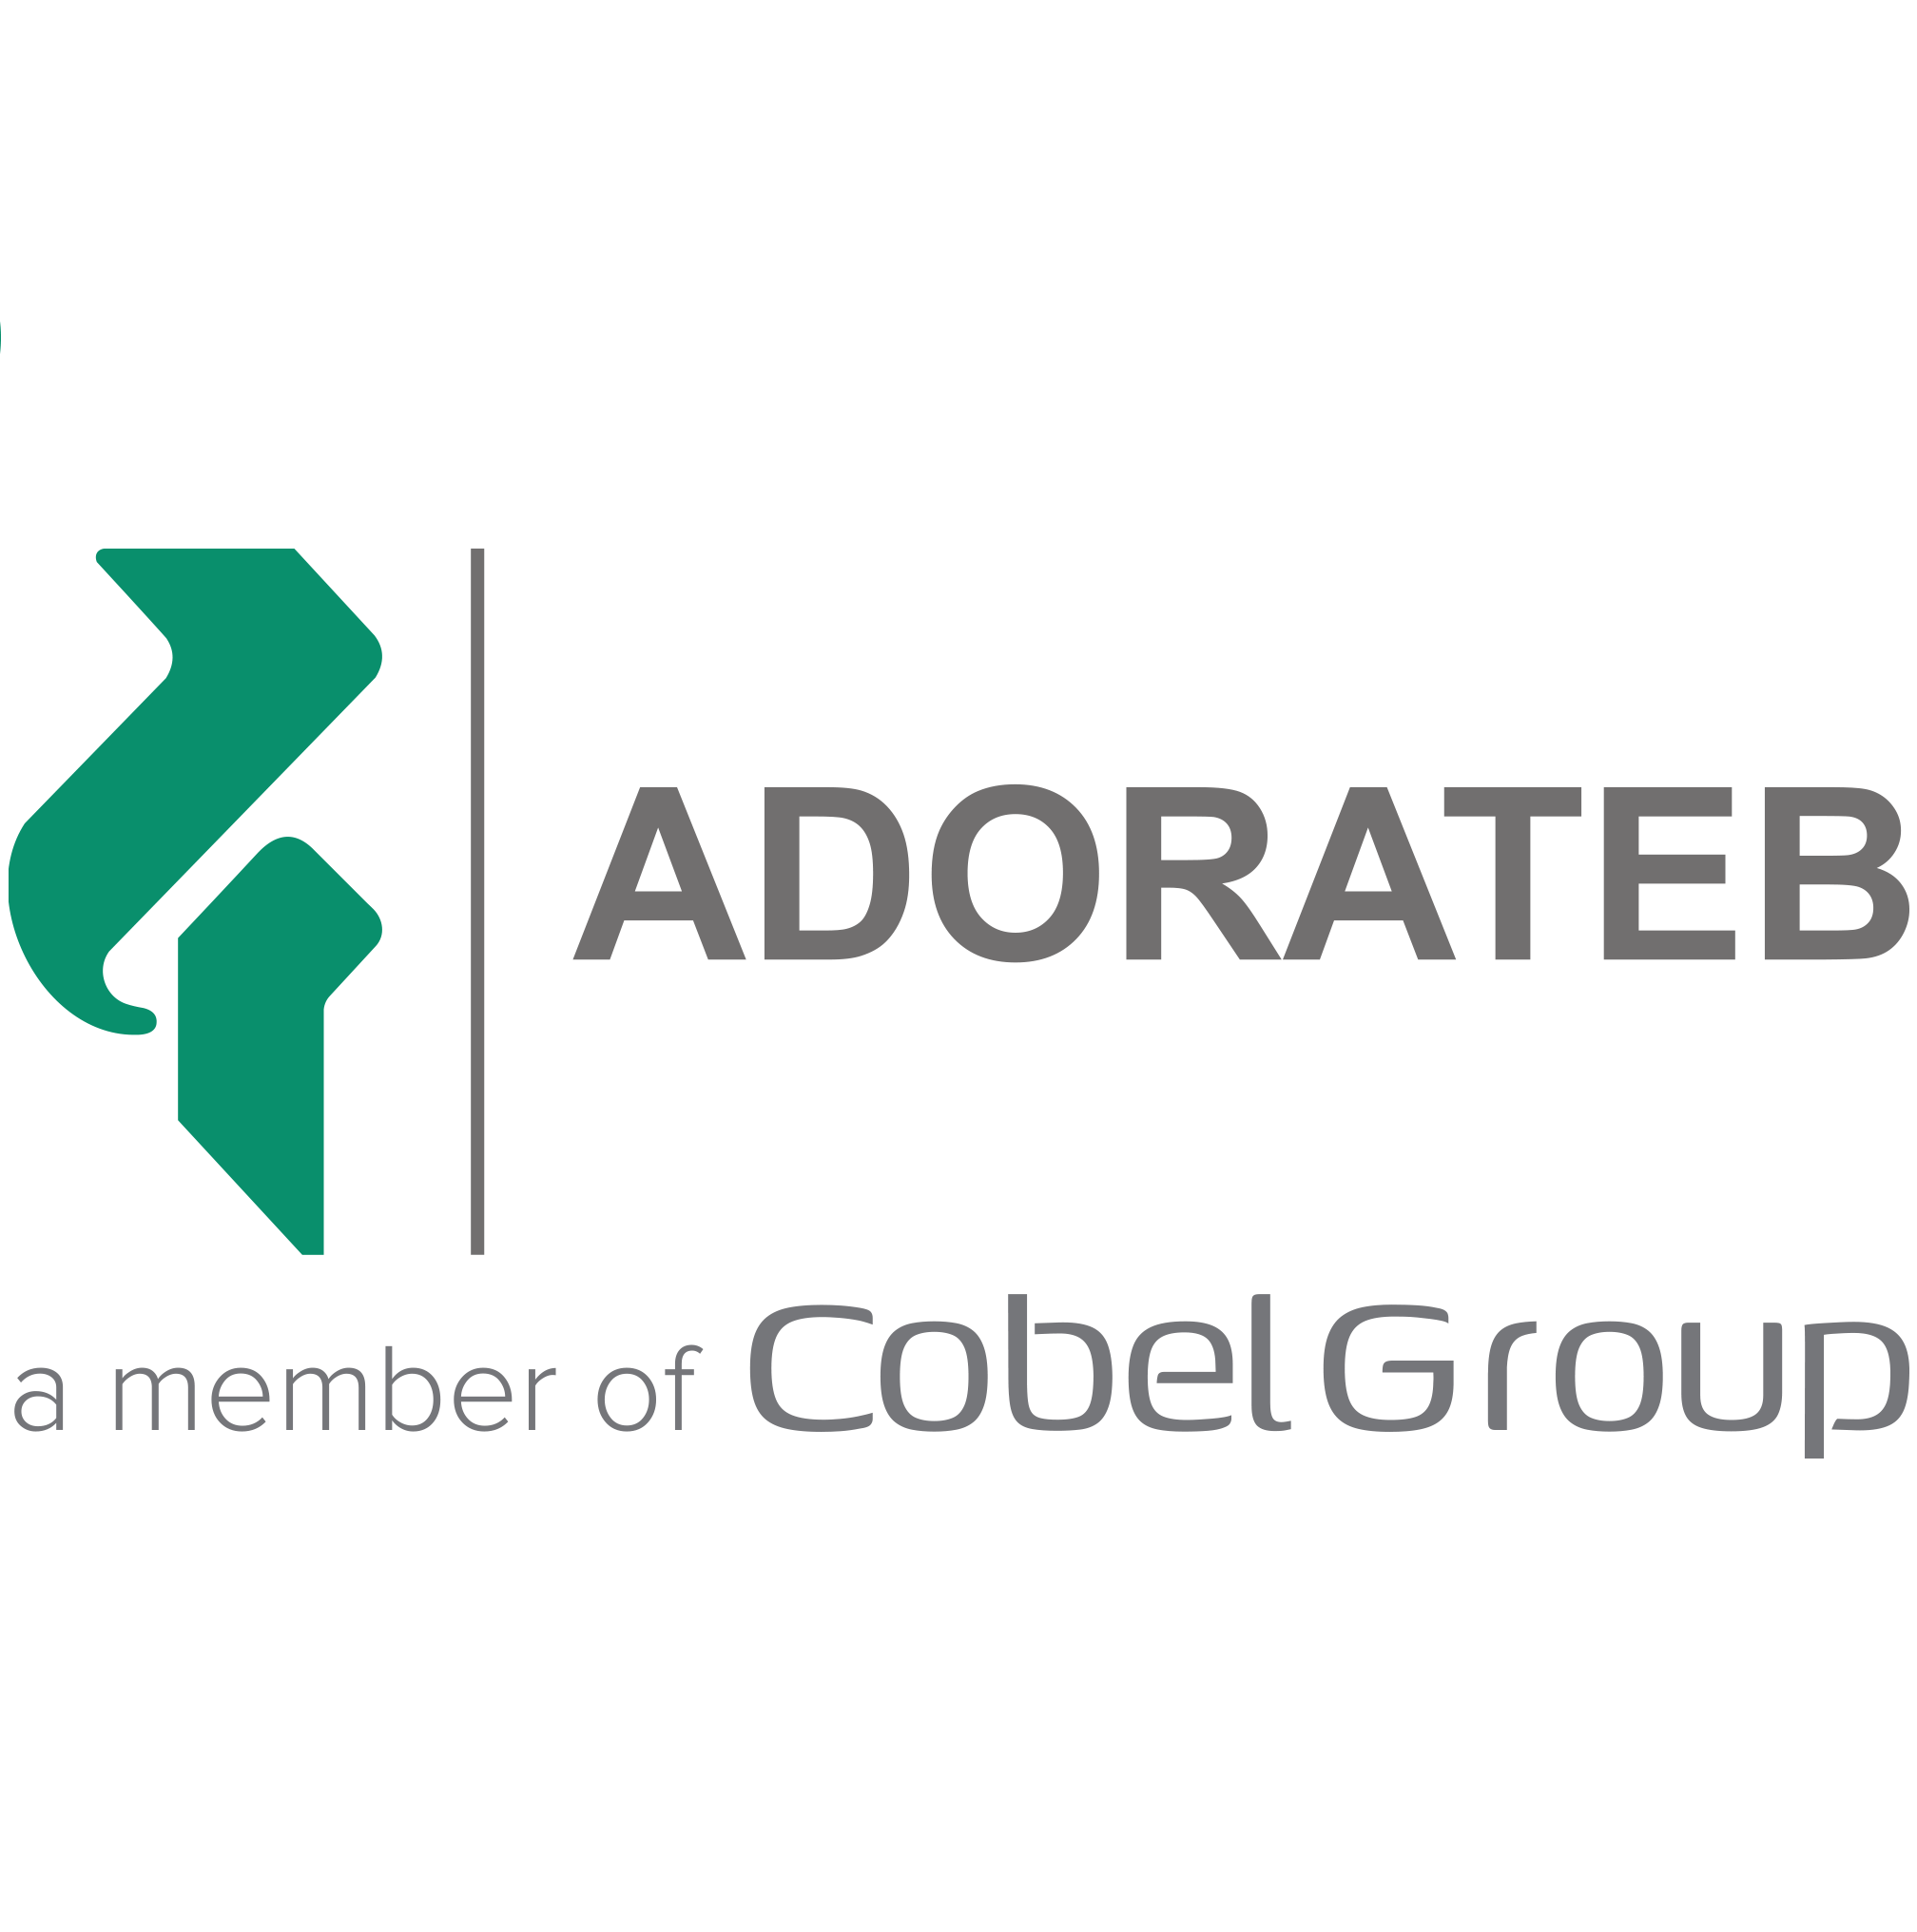 کارشناس حسابداری خرید | Purchase Accounting Expert - آدوراطب | Adorateb